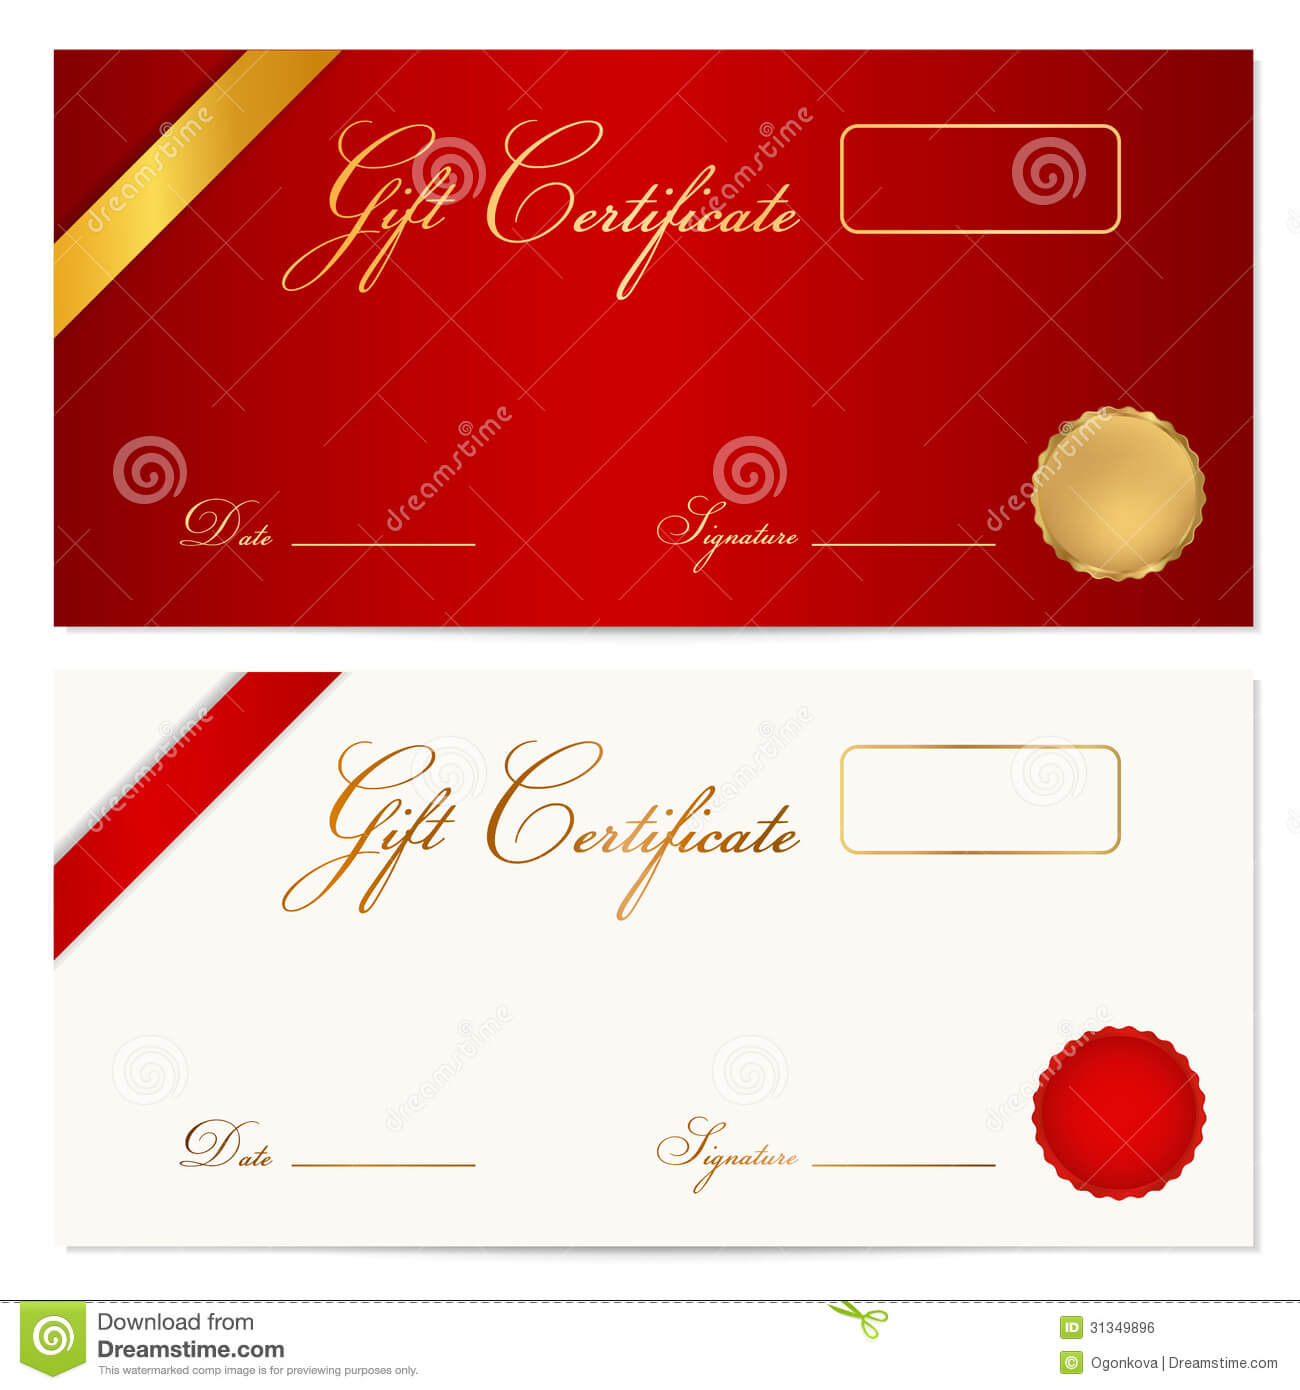 Certificatetemplategift | Get Gift Certificate Template Pertaining To Graduation Gift Certificate Template Free